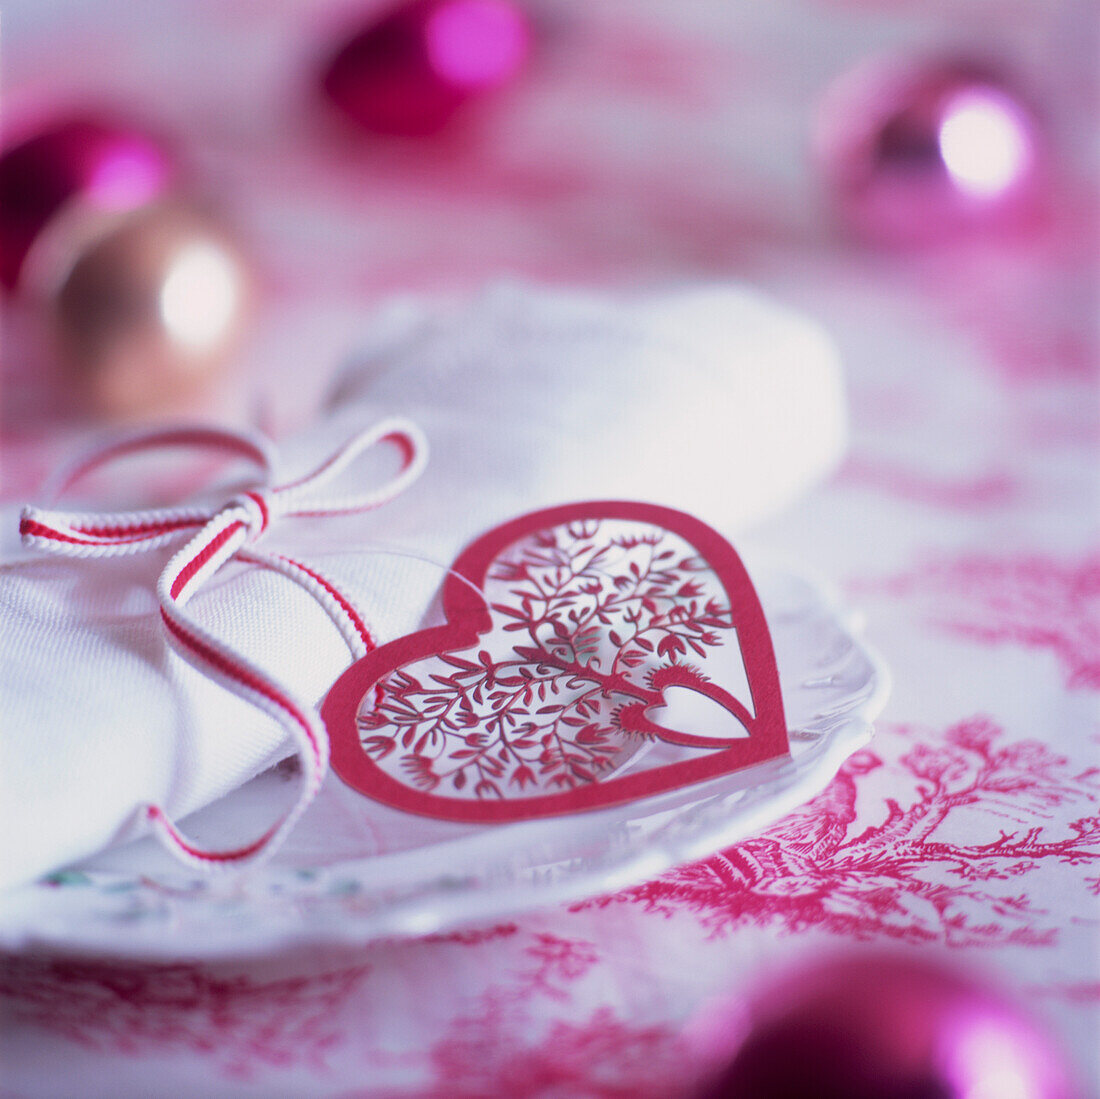 Heart shaped decoration on a napkin